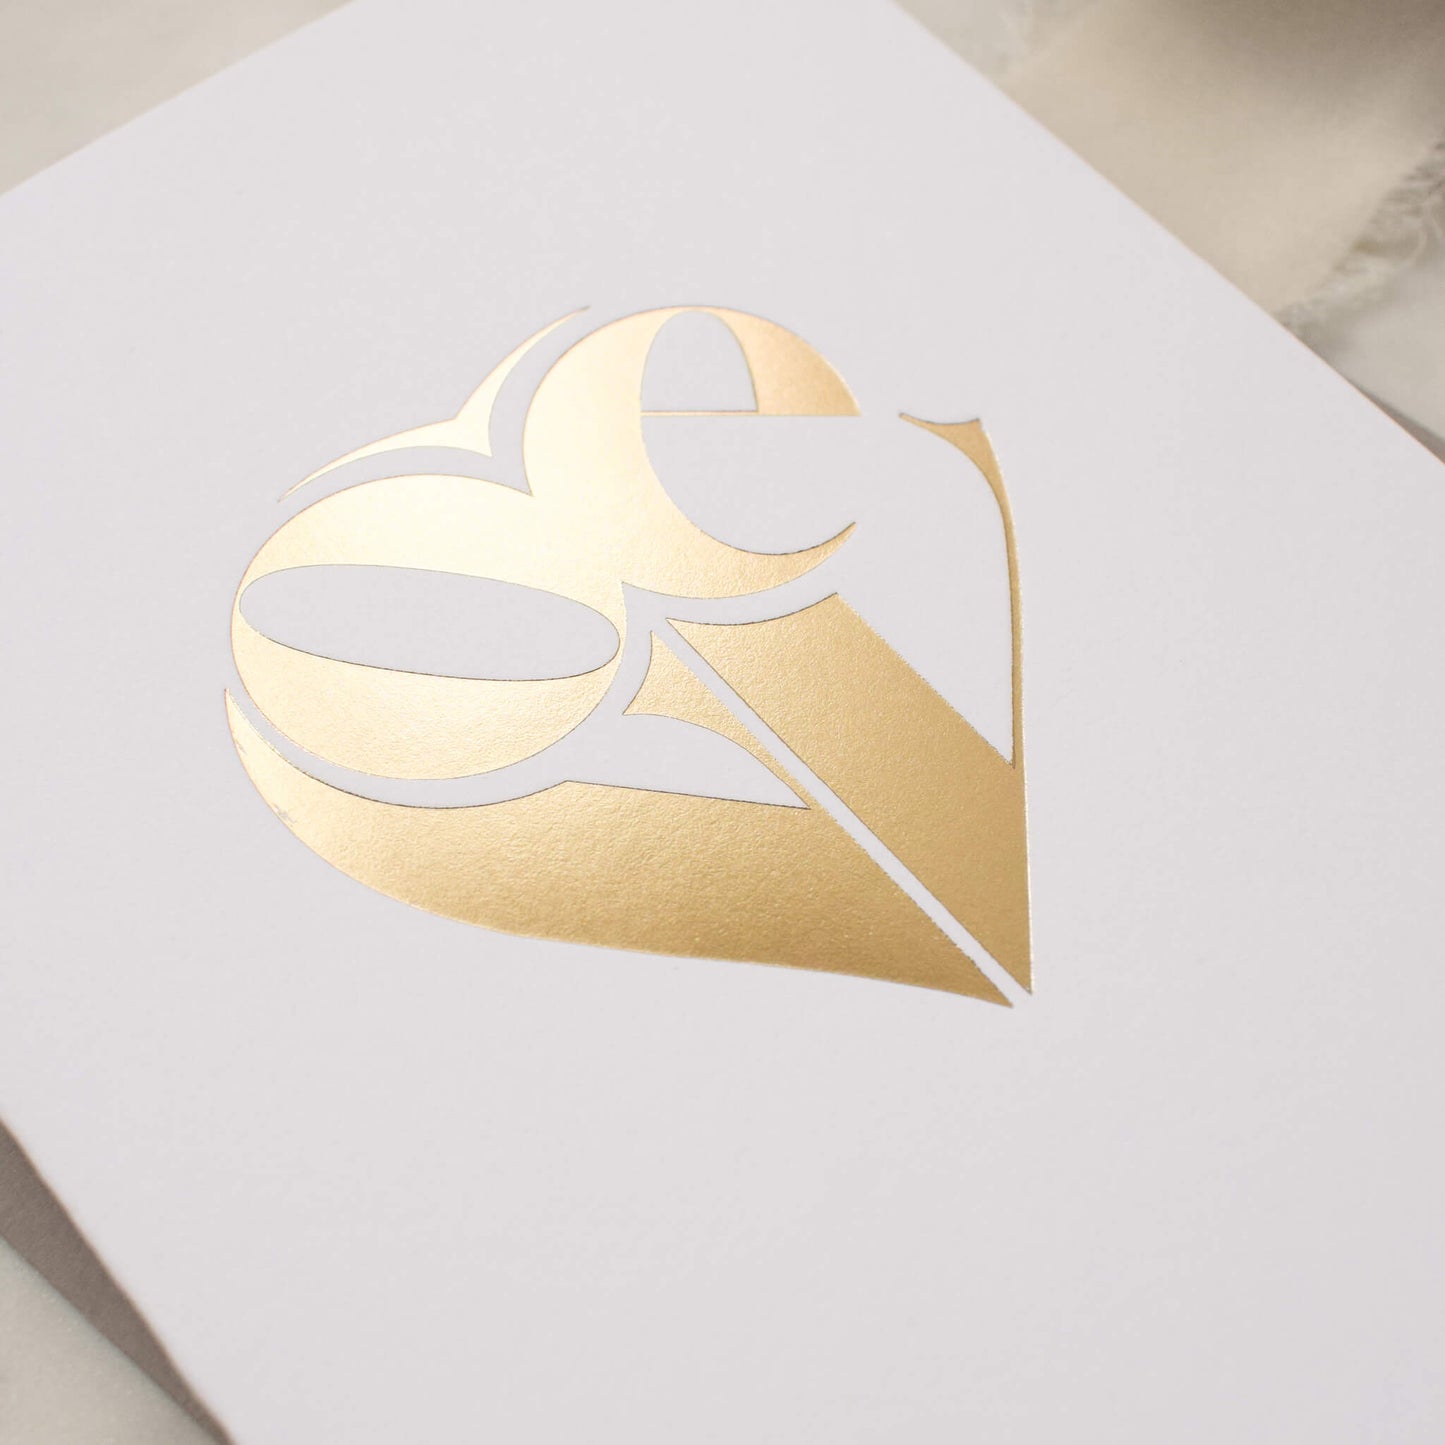 Love Heart Gold Foil Card